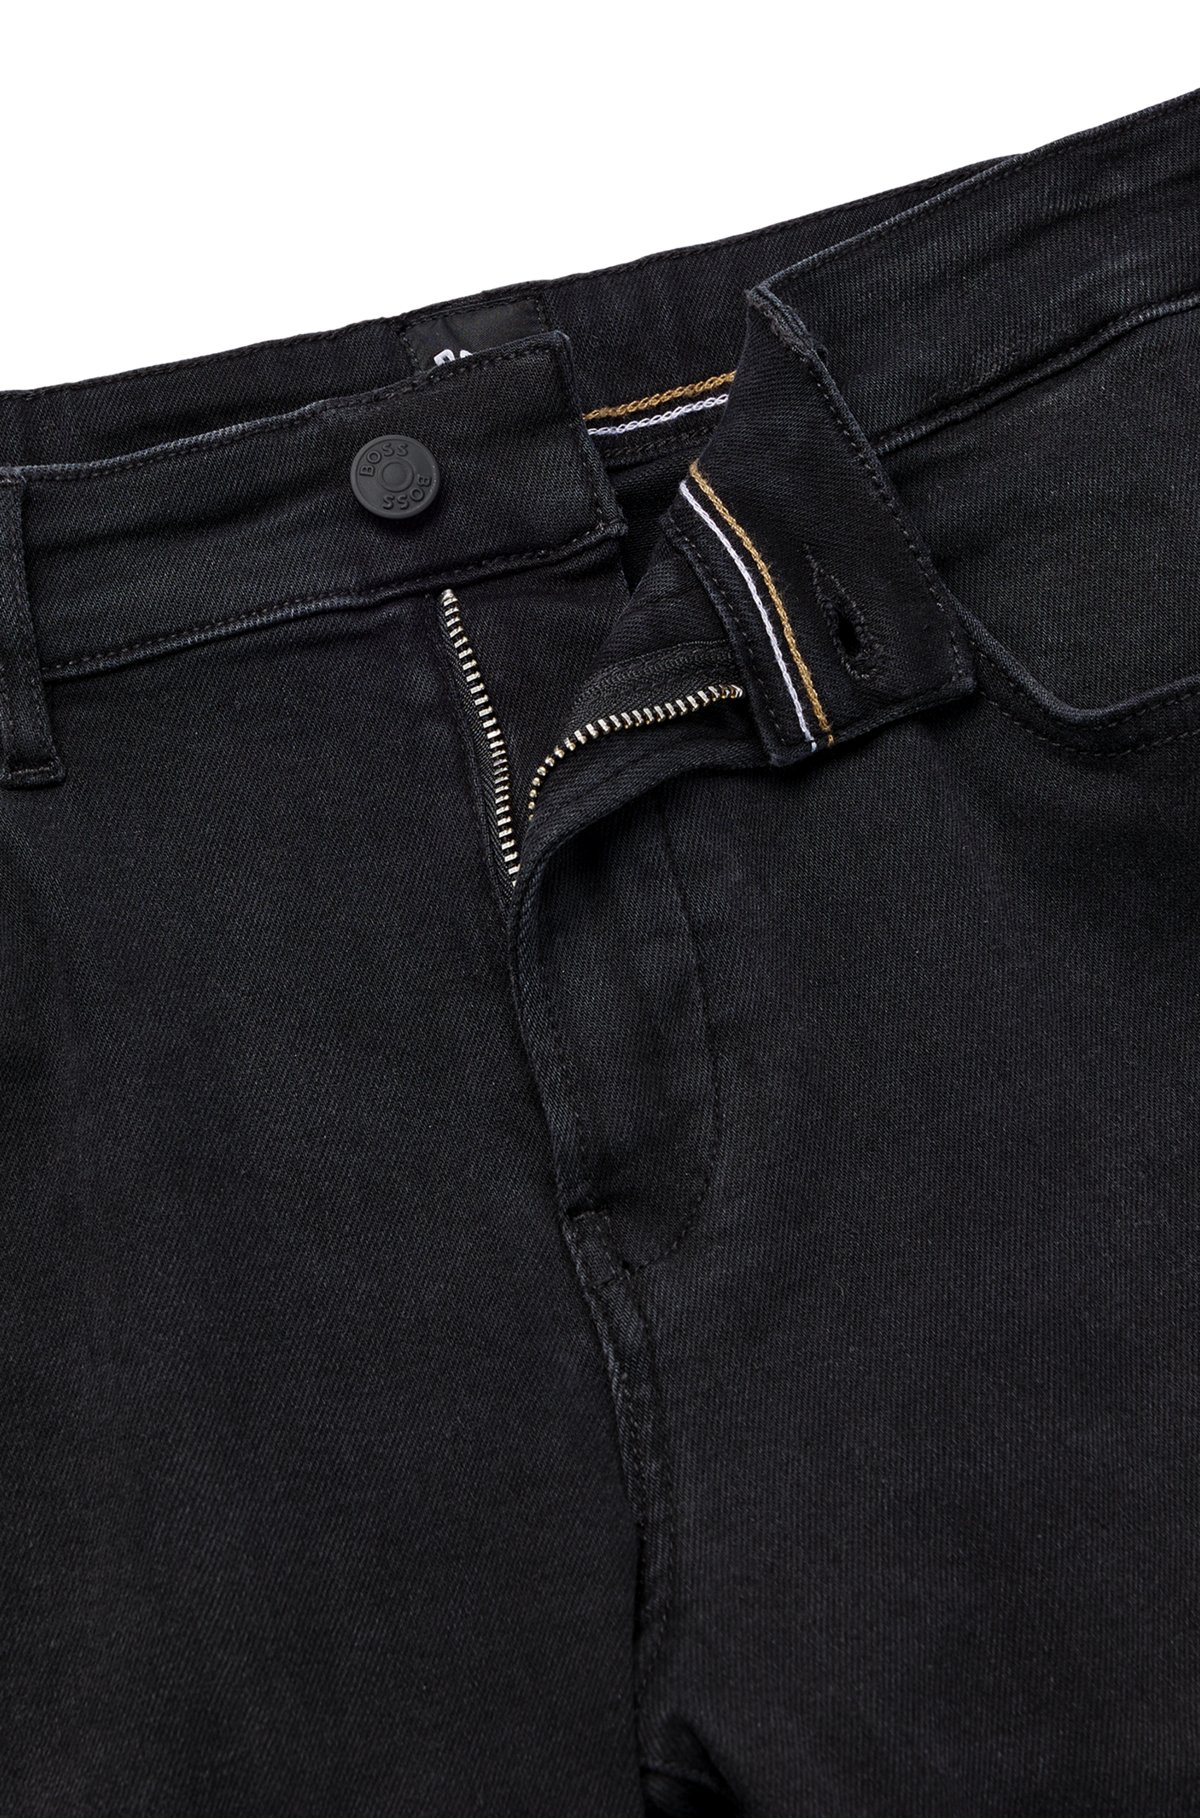 BOSS - Slim-fit jeans in black-black supreme-movement denim